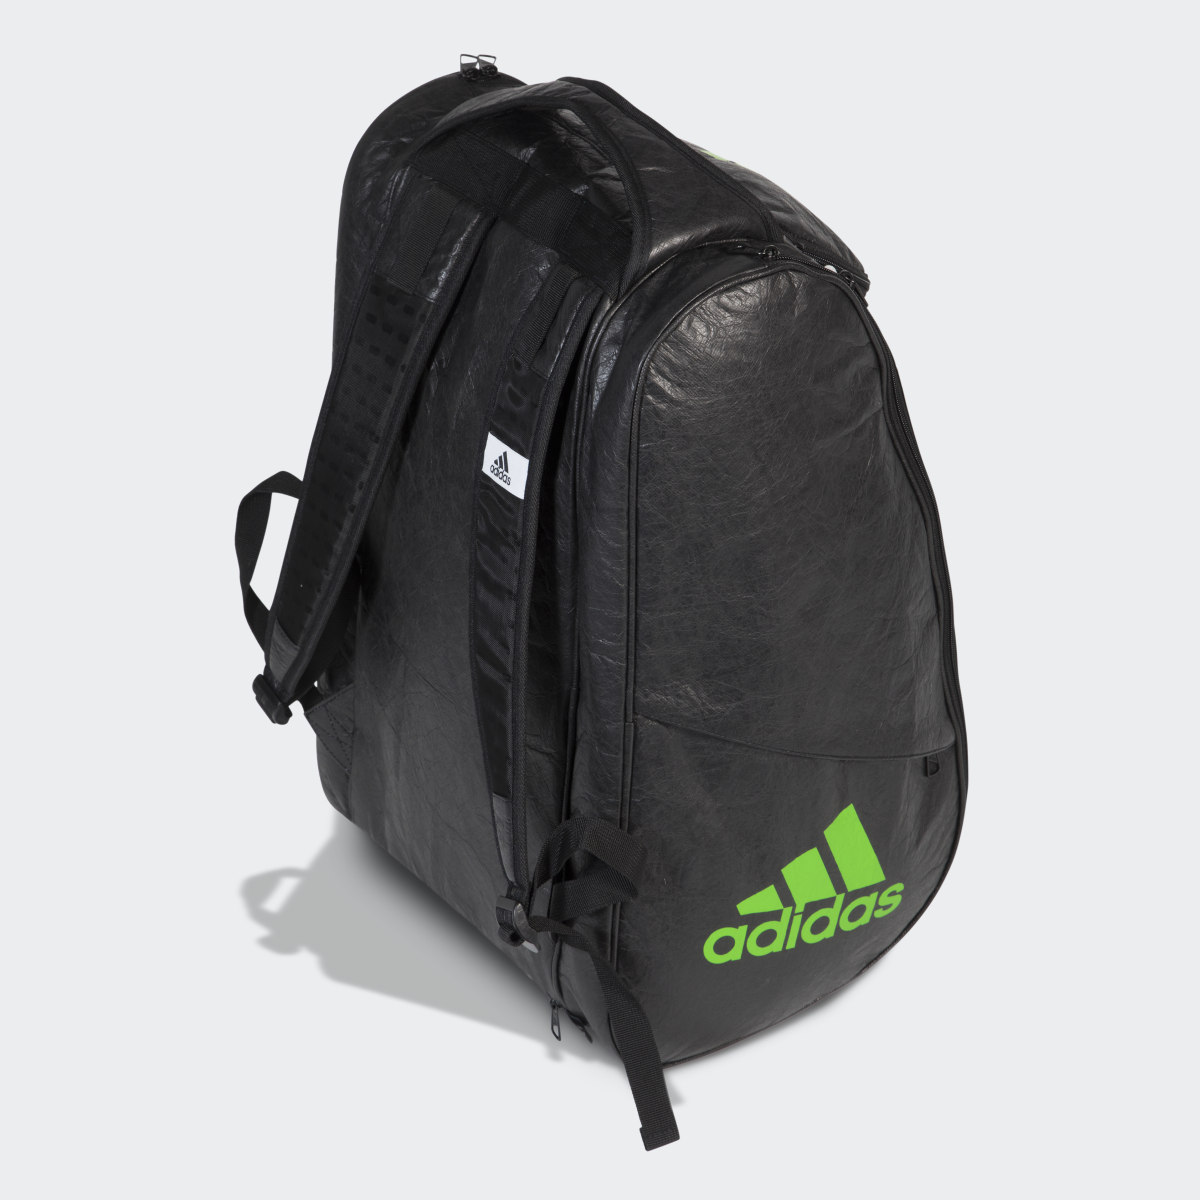 Adidas Multigame Racquet Bag. 4